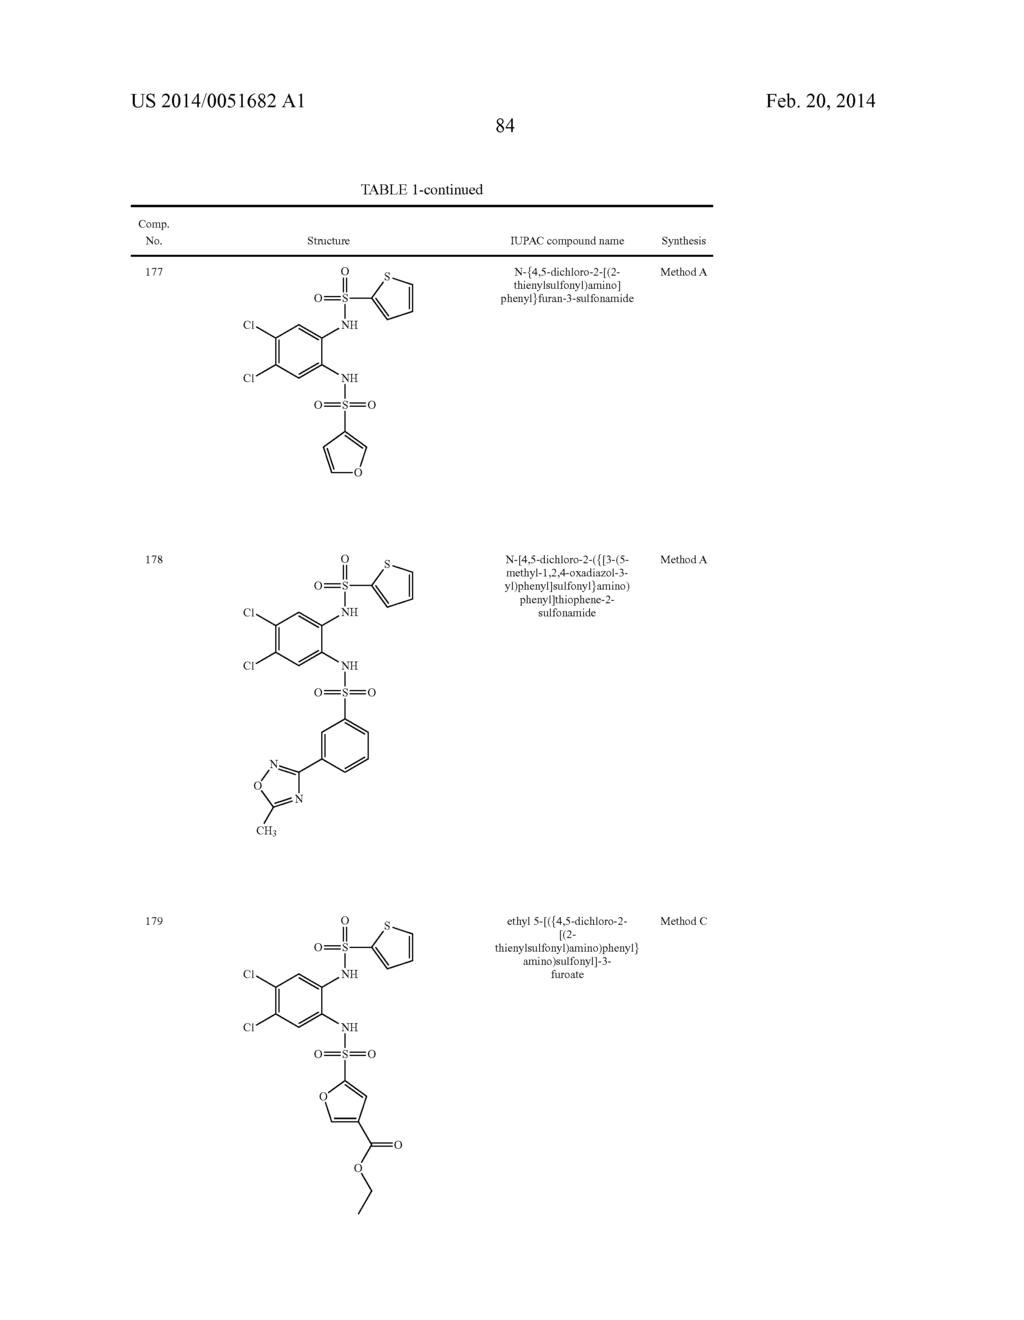 NOVEL 1,2- BIS-SULFONAMIDE DERIVATIVES AS CHEMOKINE RECEPTOR MODULATORS - diagram, schematic, and image 85